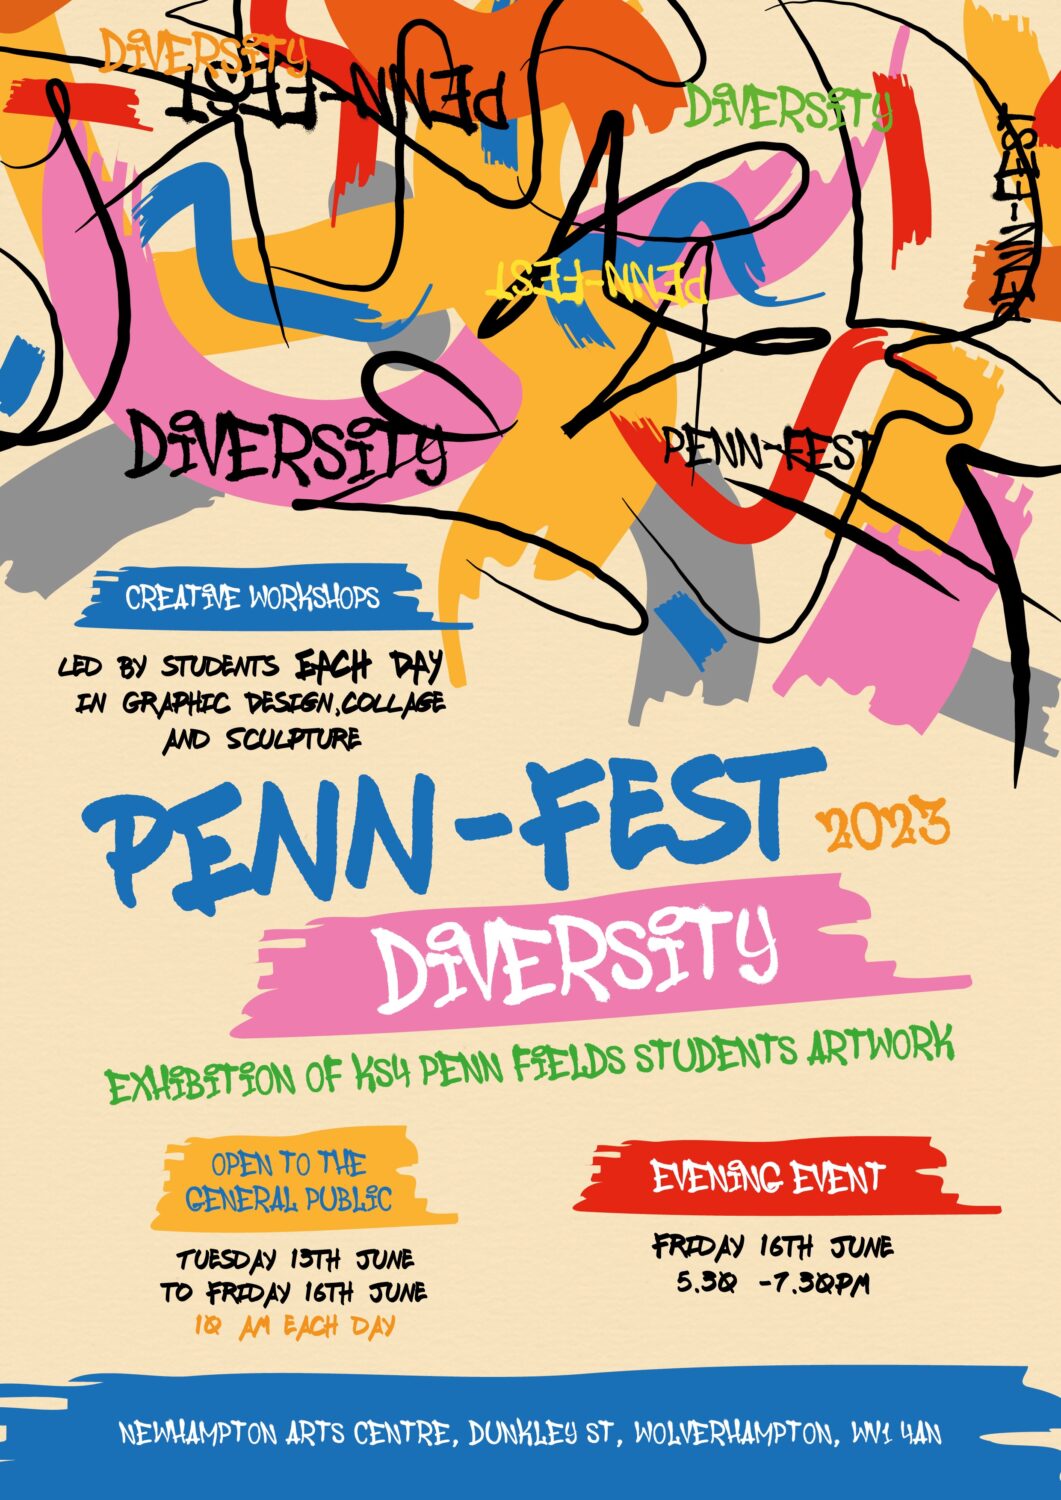 Penn Fest 2023 Diversity Newhampton Arts Centre